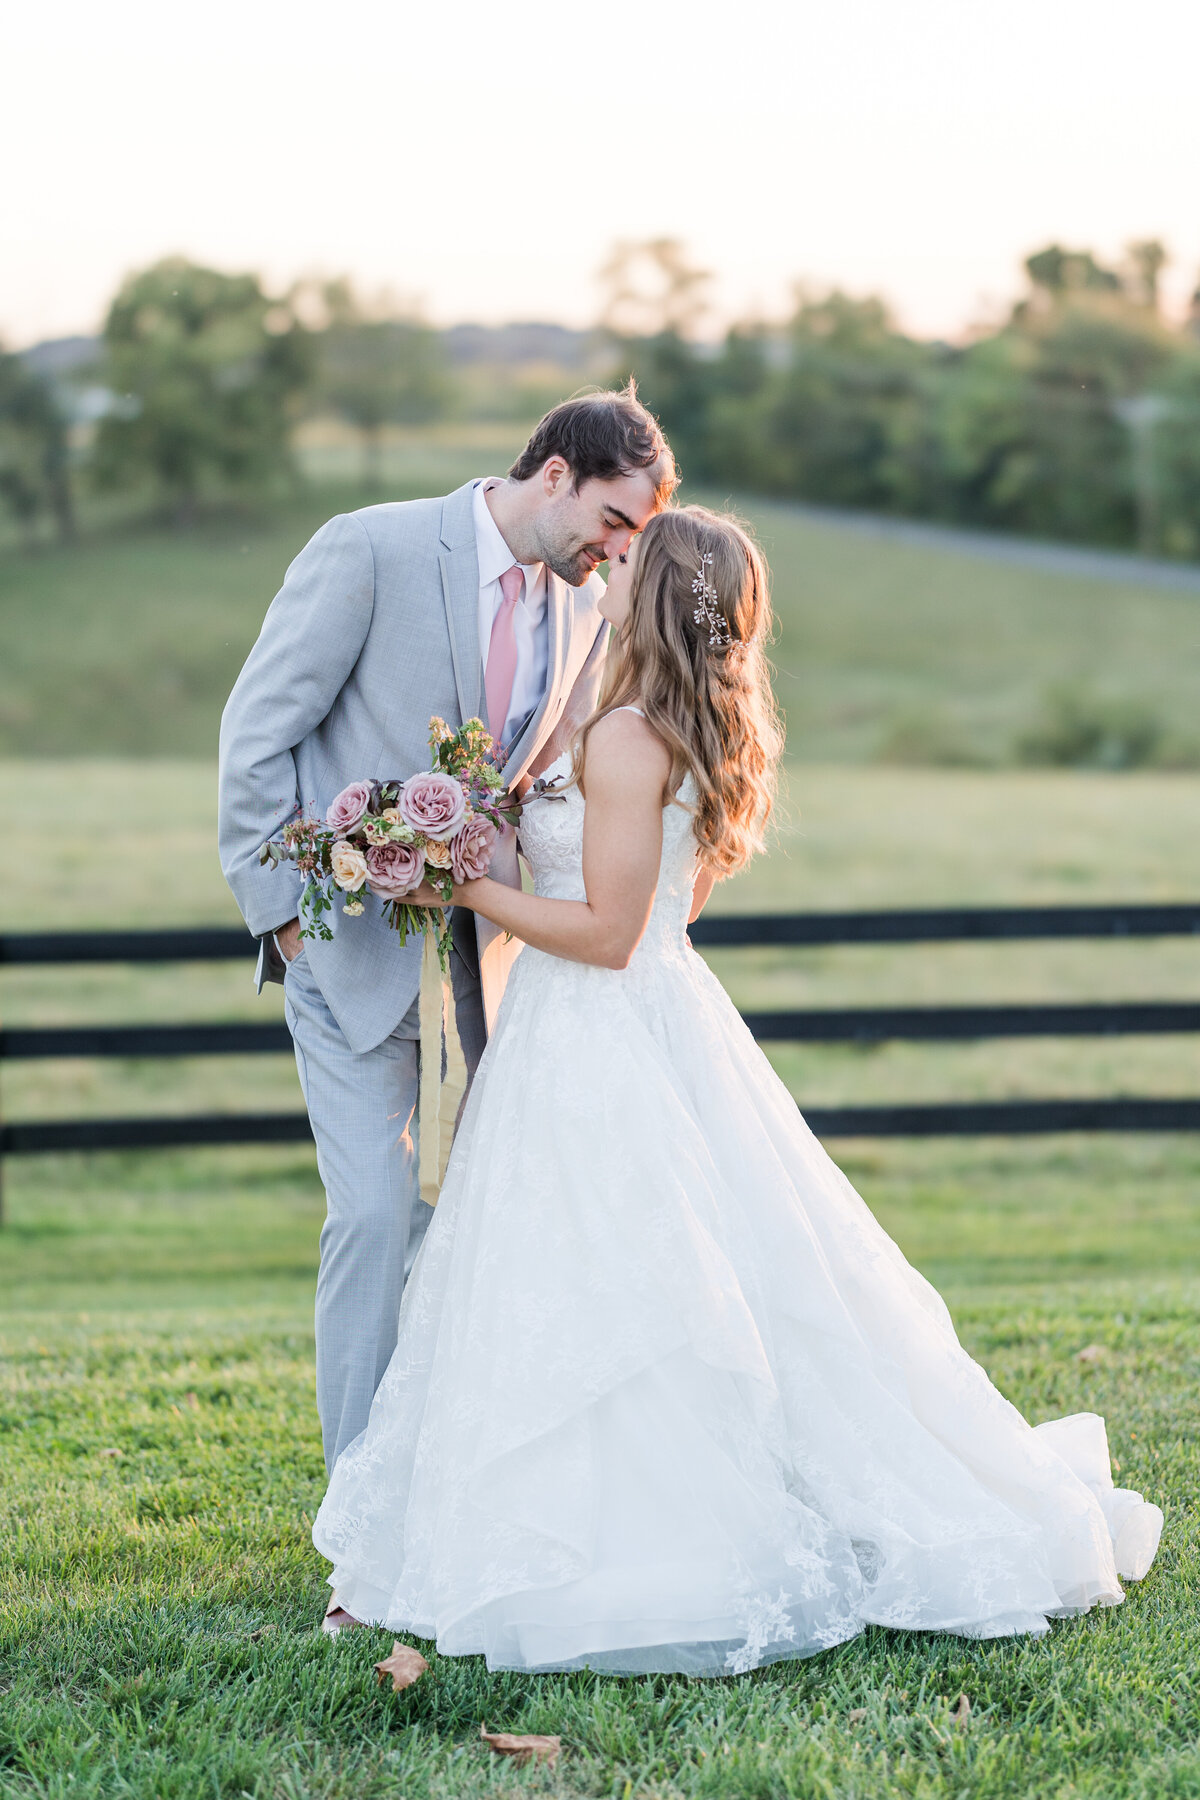 Kelsie & Marc Wedding - Taylor'd Southern Events - Maryland Wedding Photographer -28327